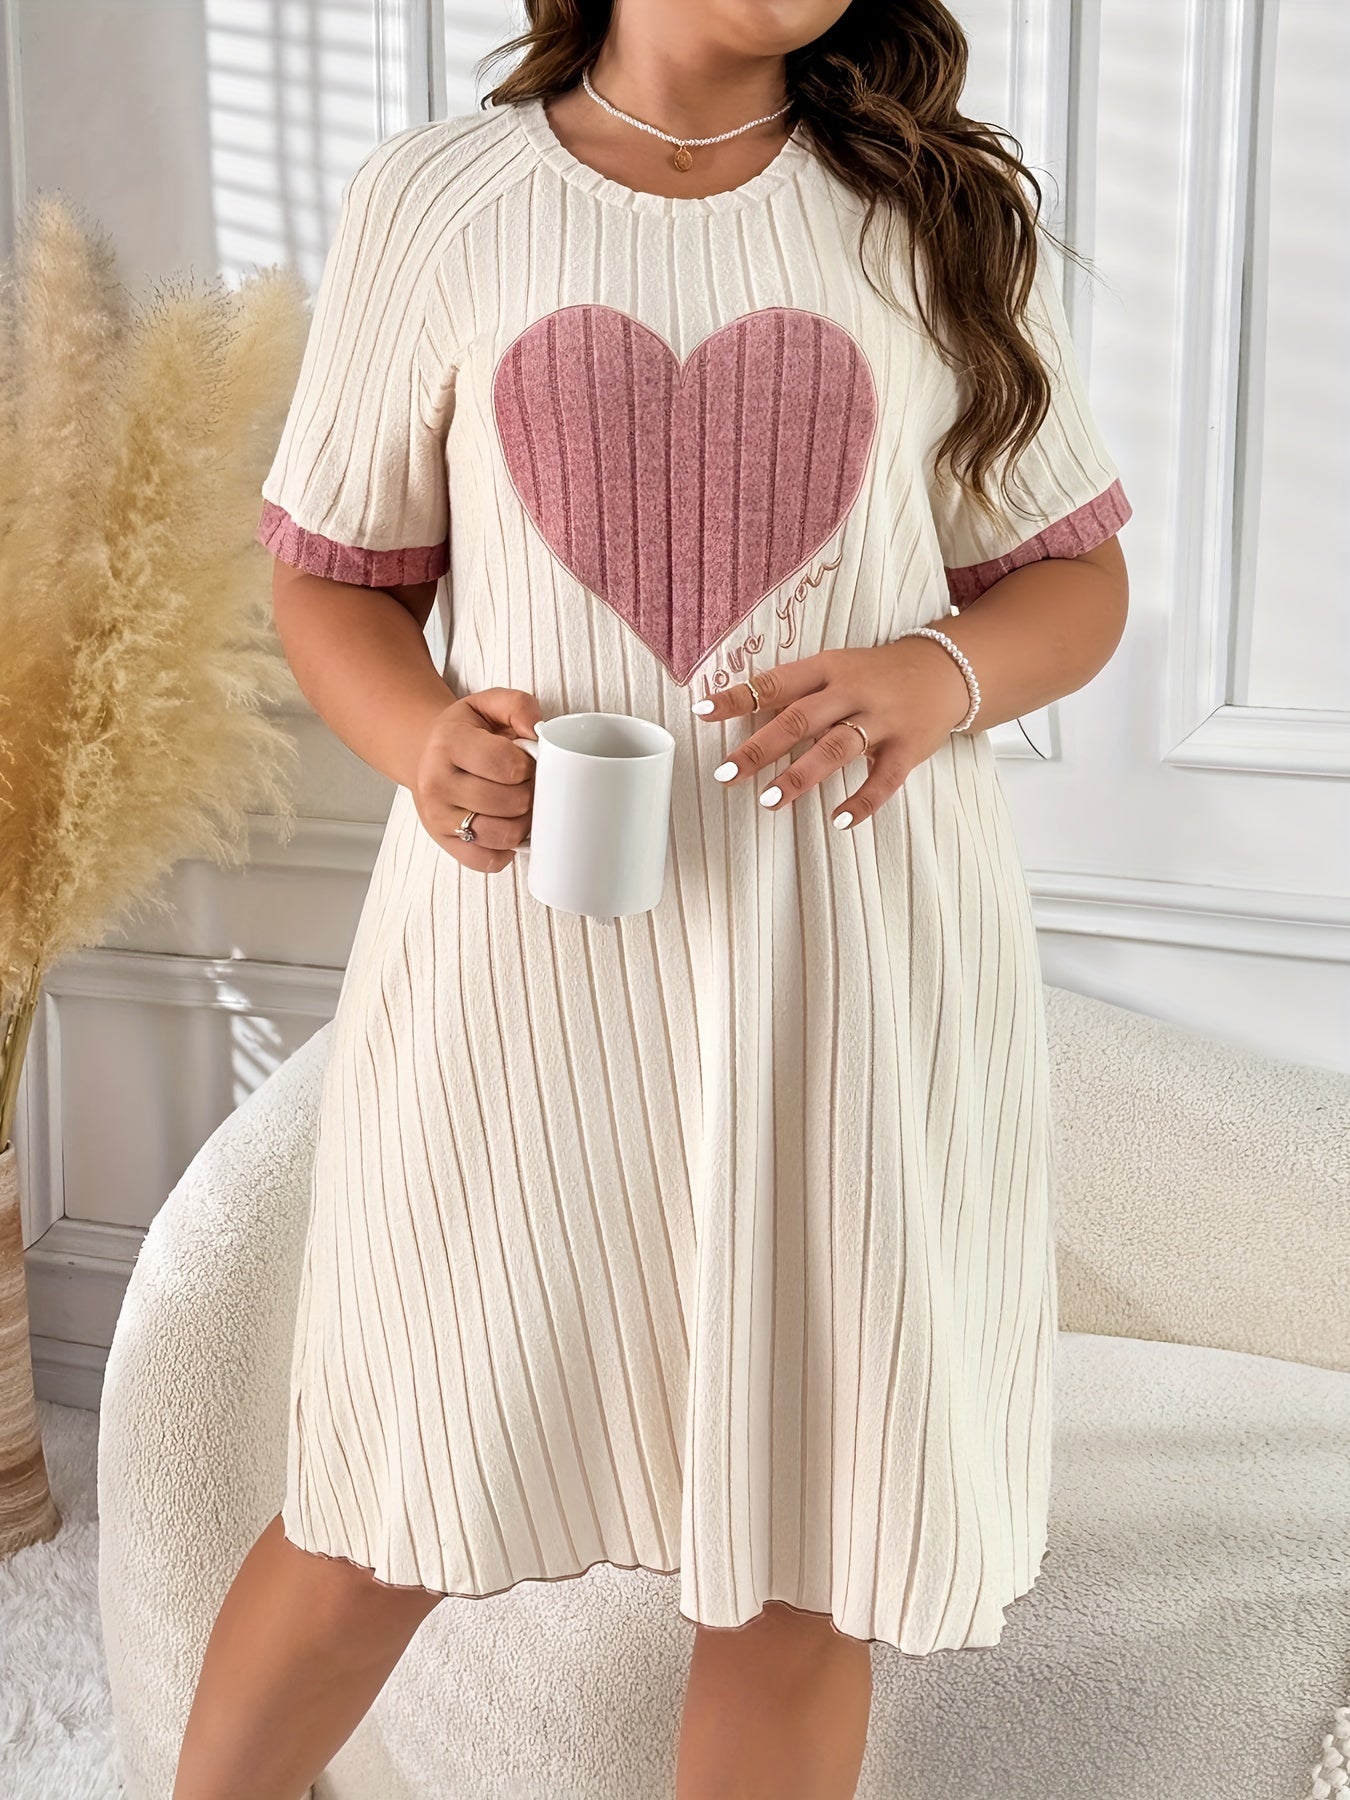 Casual Knit Heart Sleepwear - Women's Cozy Lounge Set - Women's Plus Size Casual Embroidered Loose Fit sleep dress